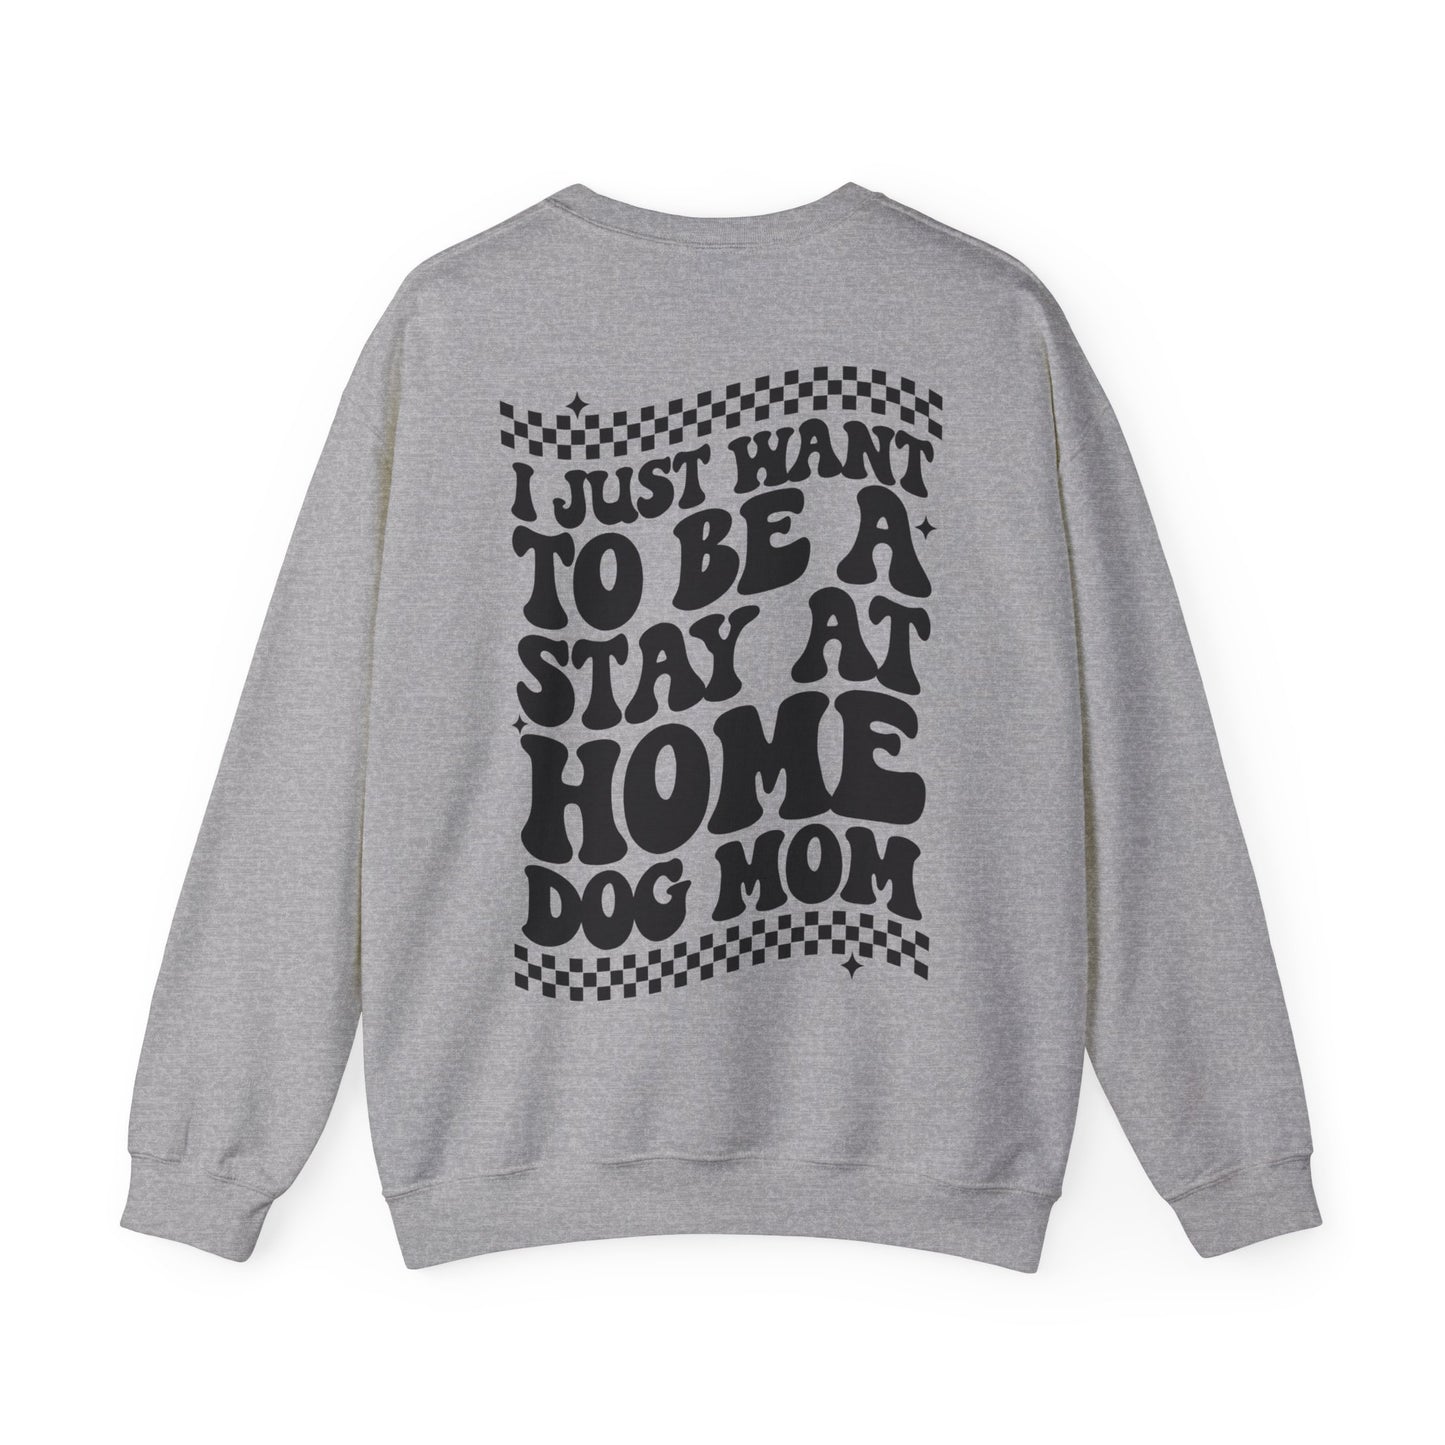 Stay at home dog mom - Crewneck Sweatshirt